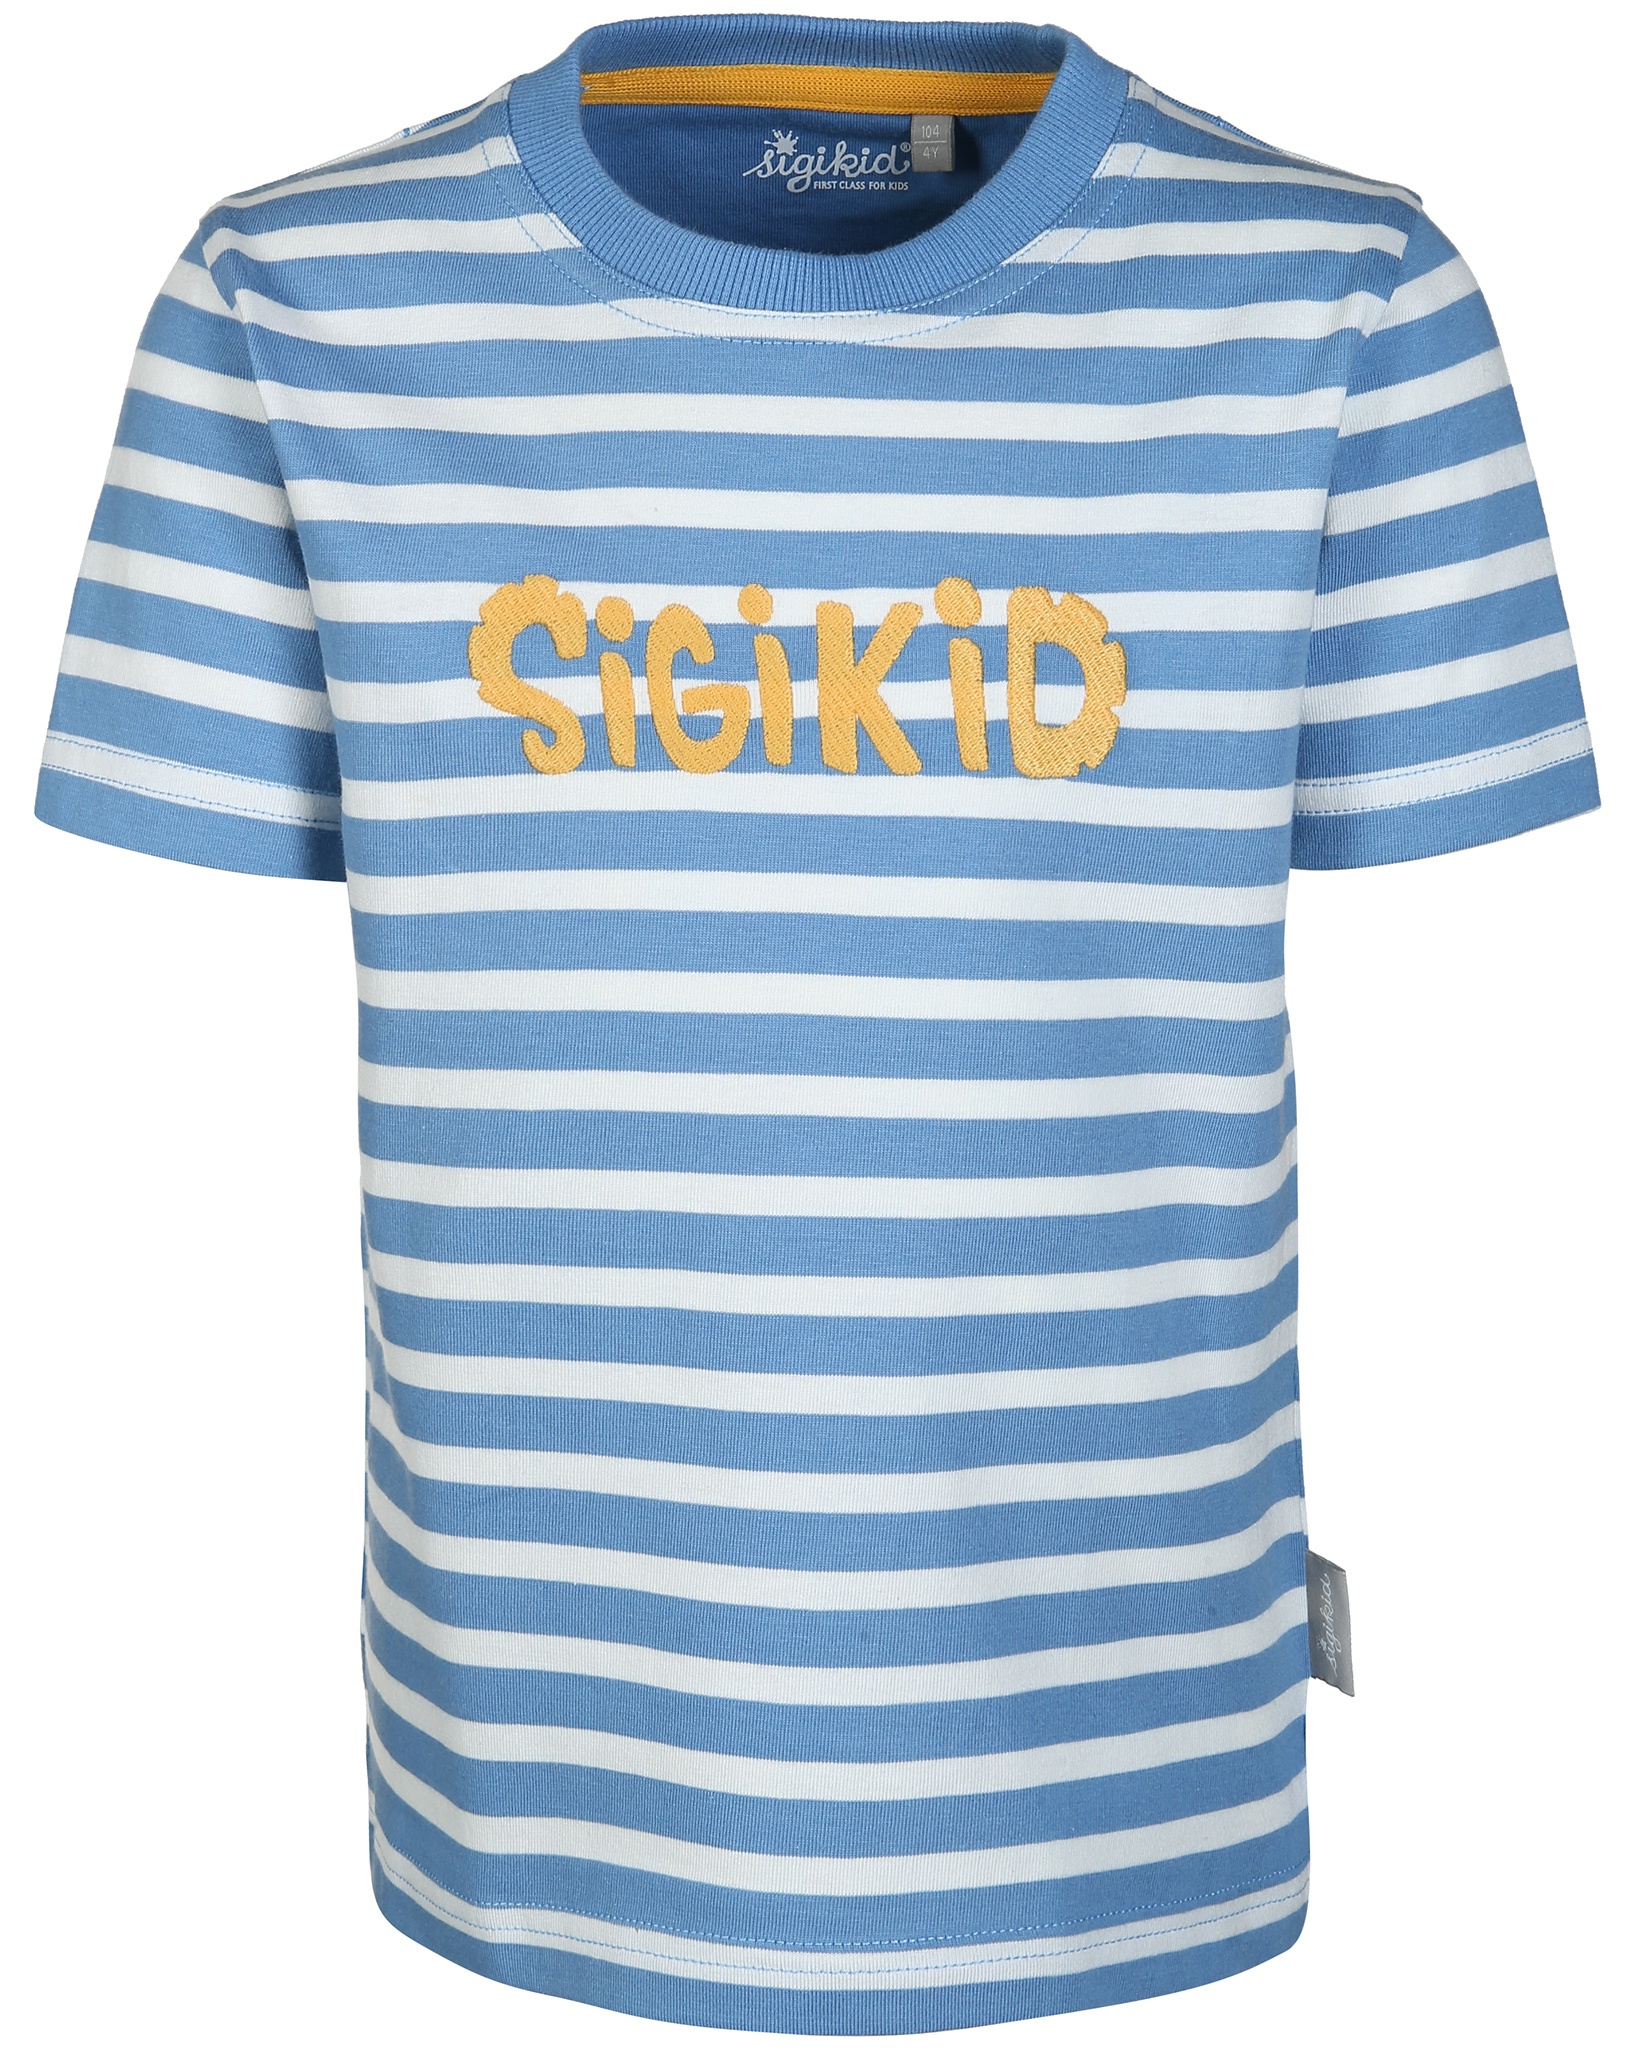 Sigikid - T-Shirt SIGIKID gestreift in blau/weiß, Gr.104